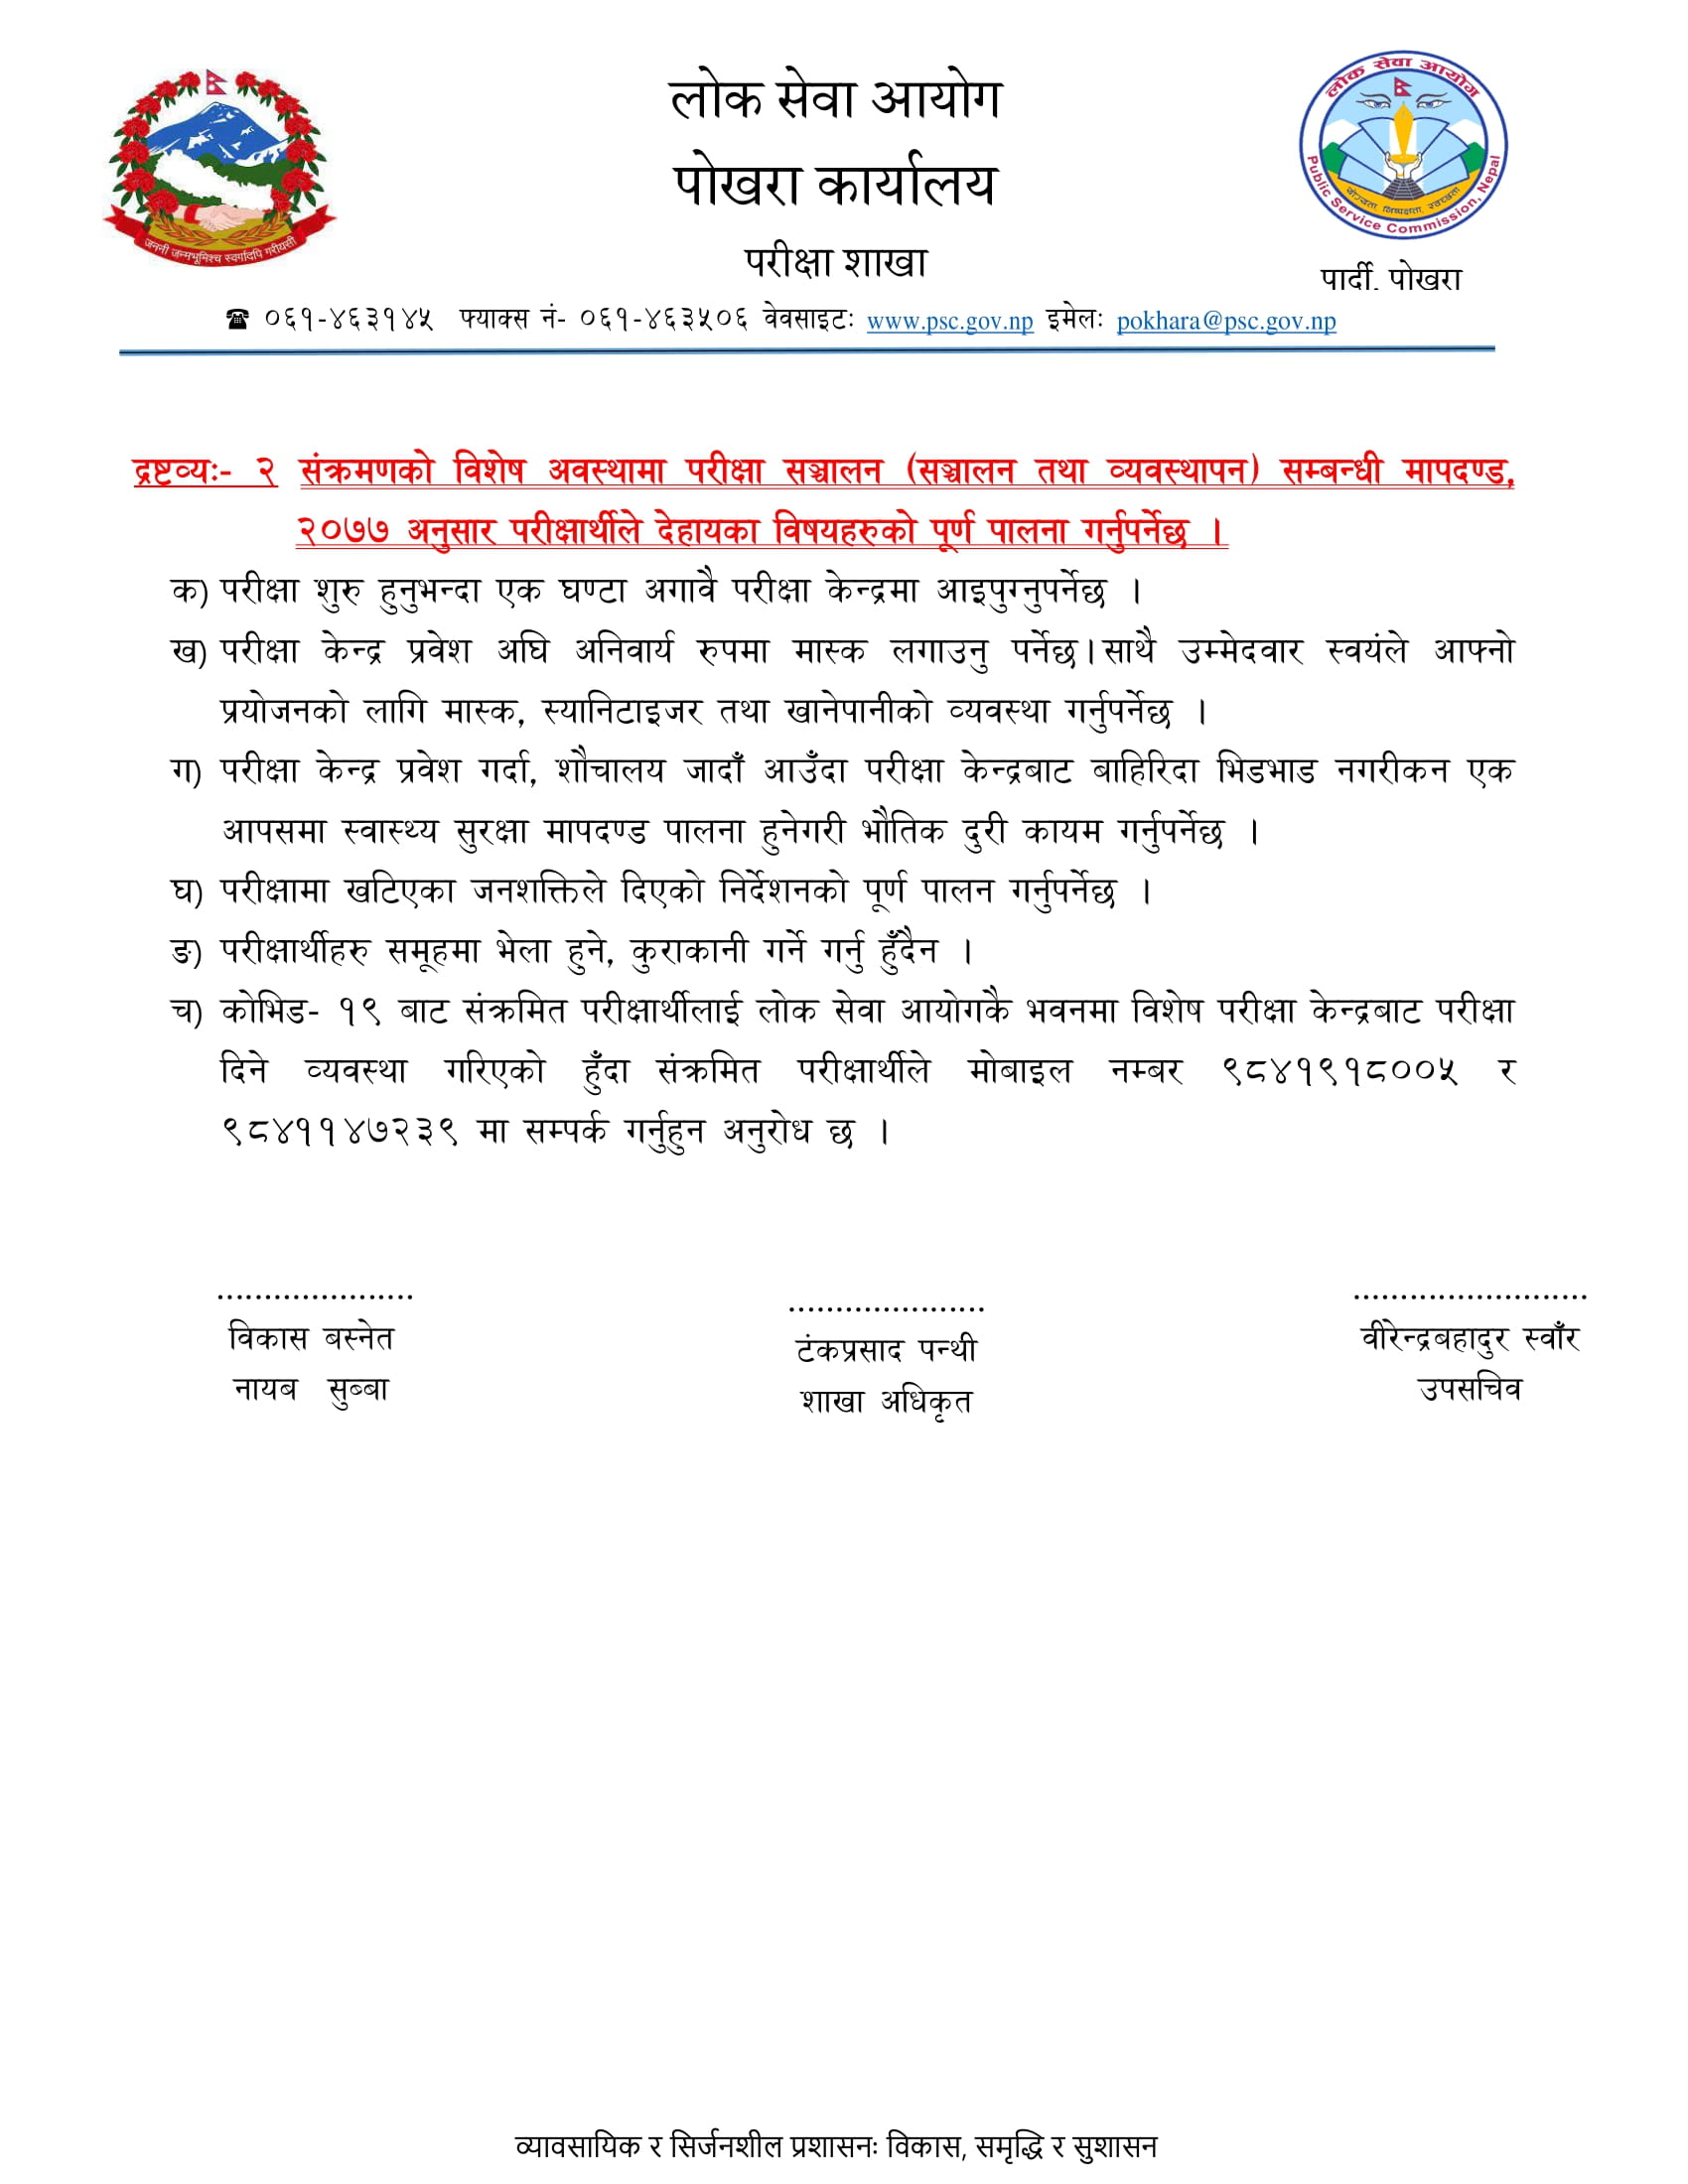 APF Constable Pokhara Kaski Written Exam Center